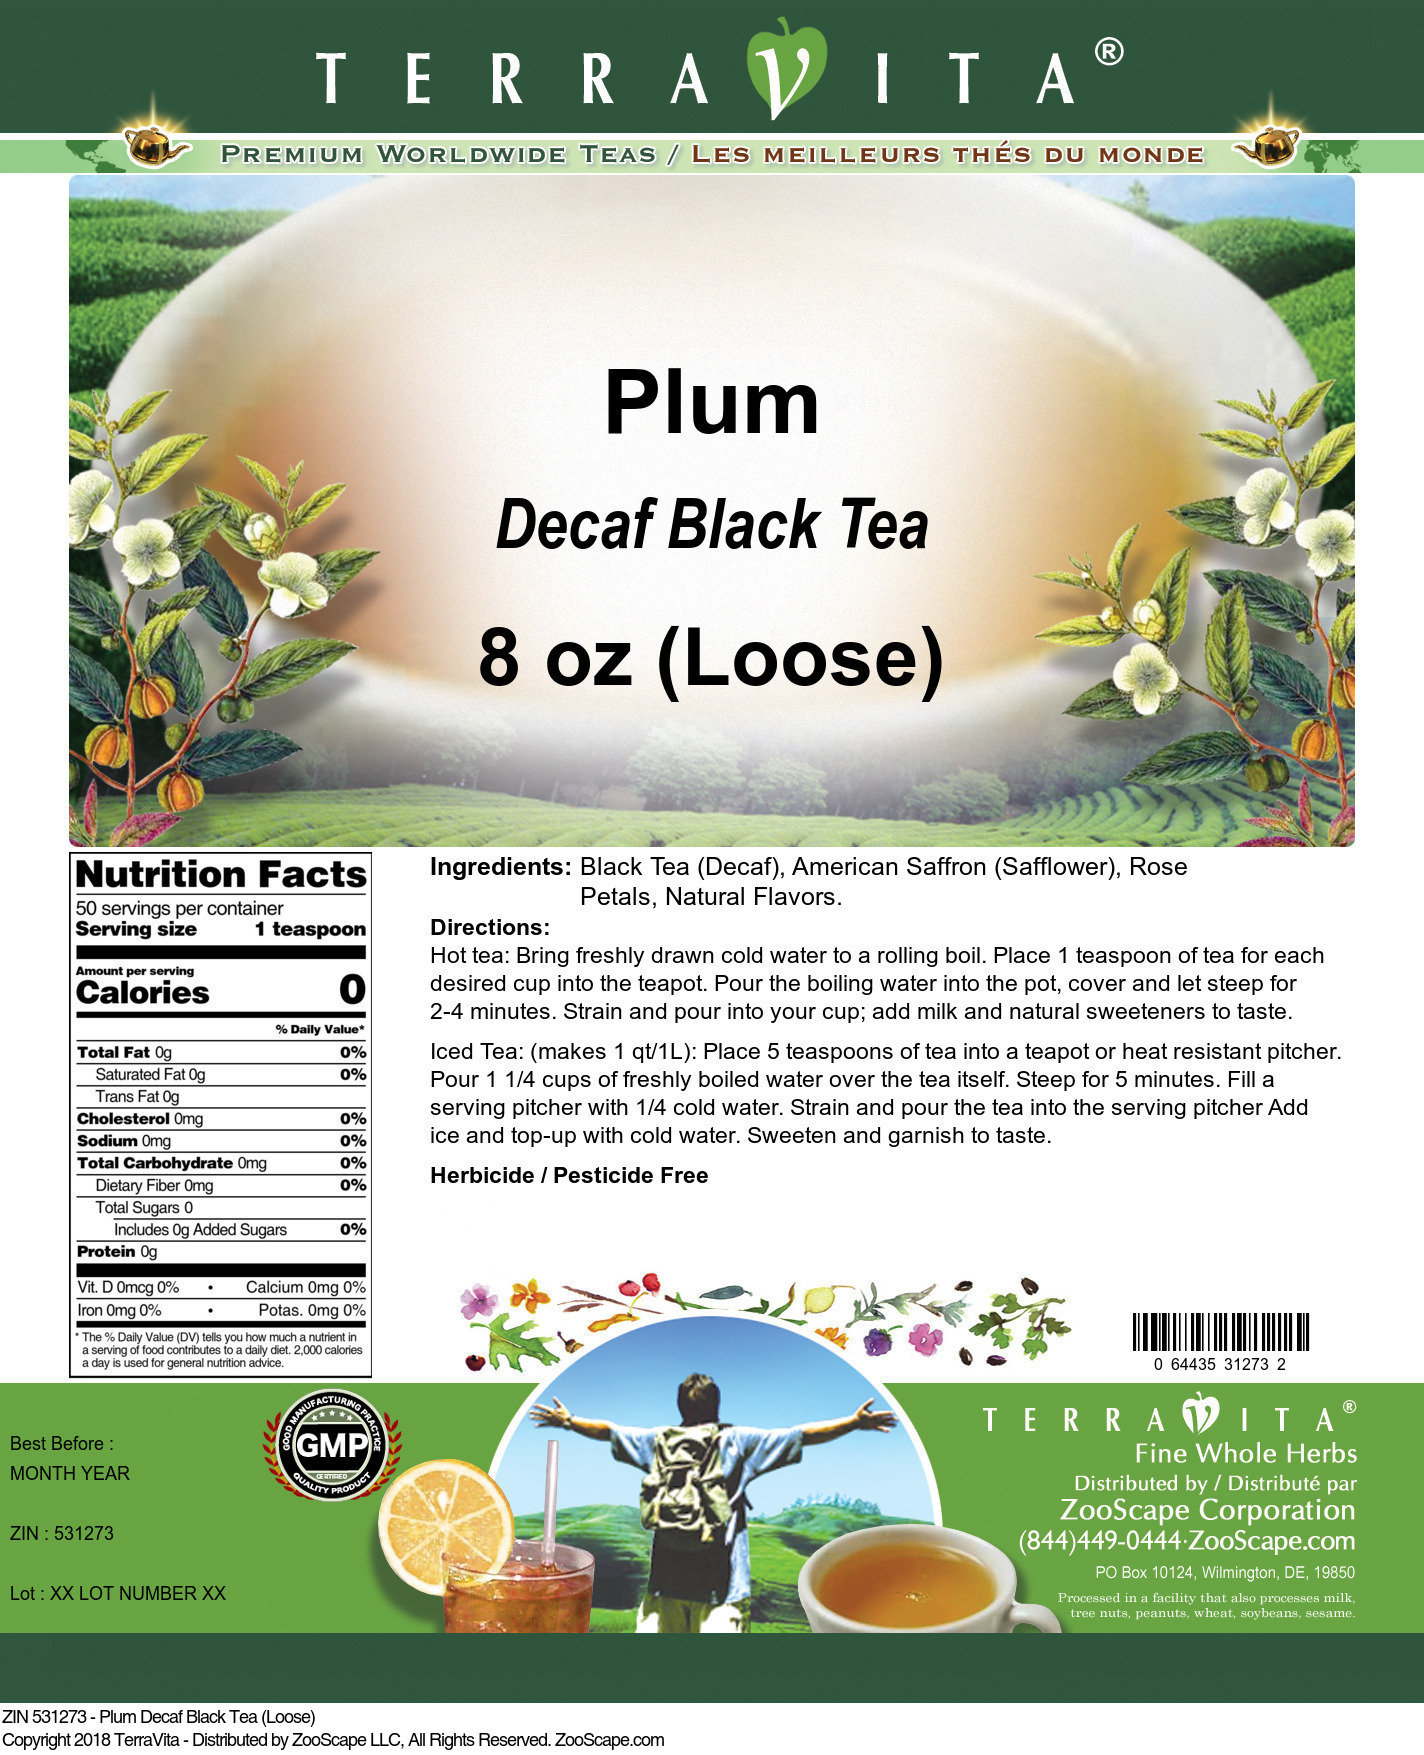 Plum Decaf Black Tea (Loose) - Label